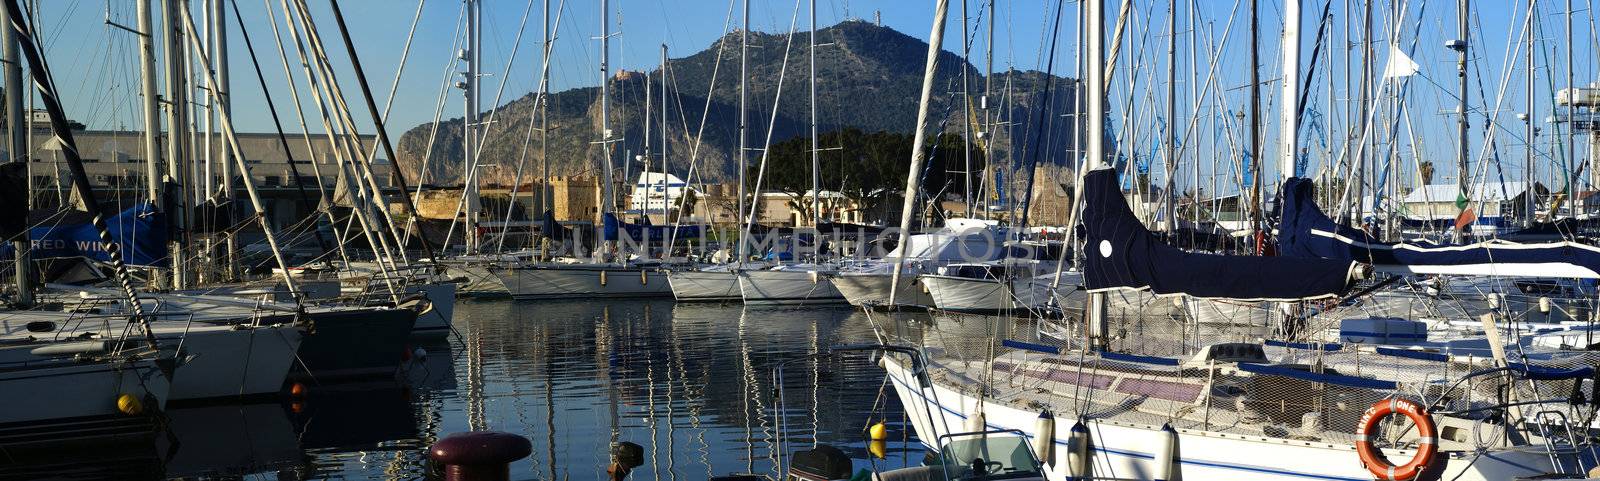 Marina at Palermo. Sicily by gandolfocannatella